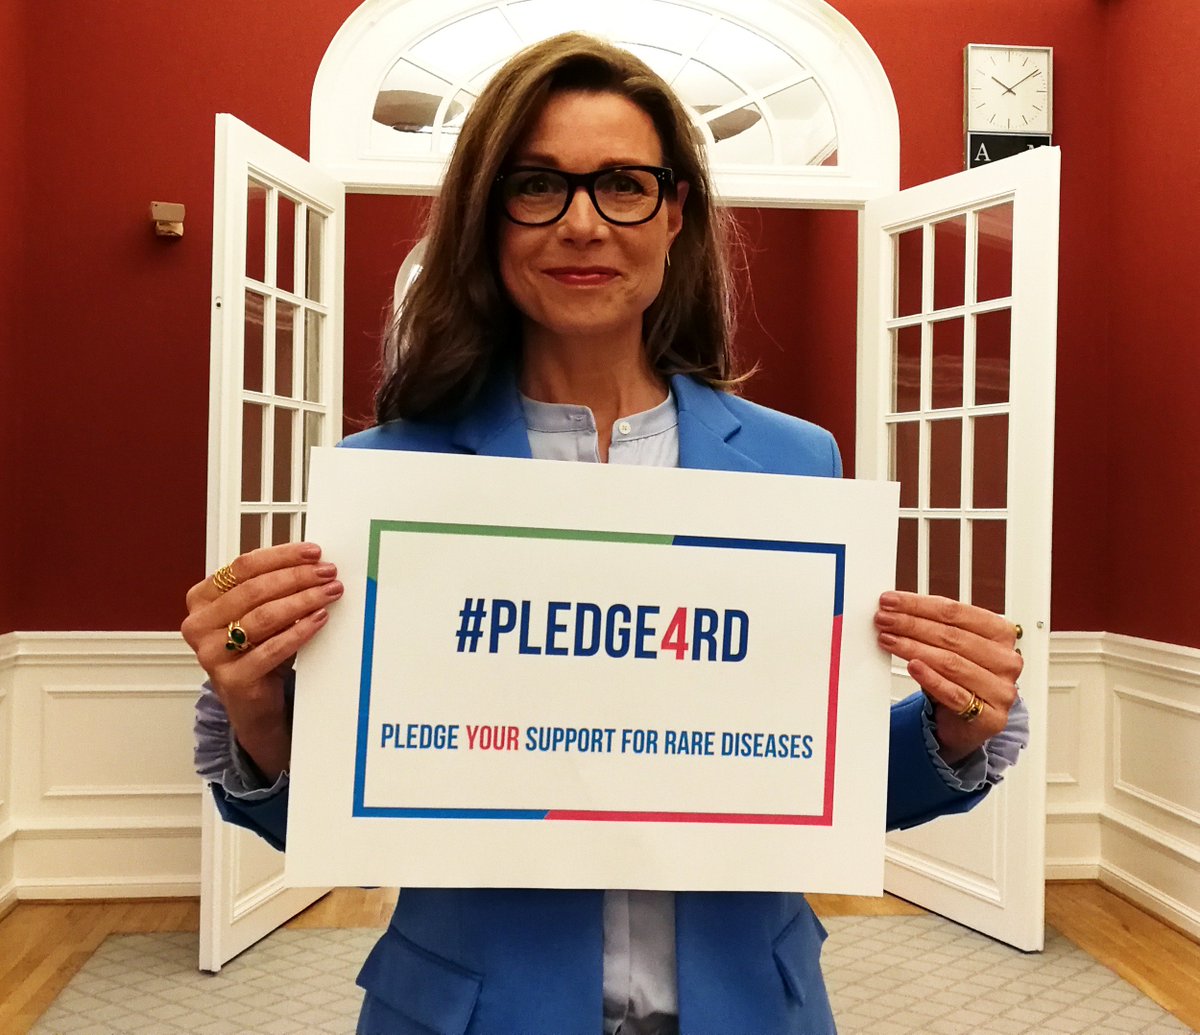 Photo from #pledge4rd on Twitter on Lene_Jensen_DK at 5/13/19 at 11:53AM